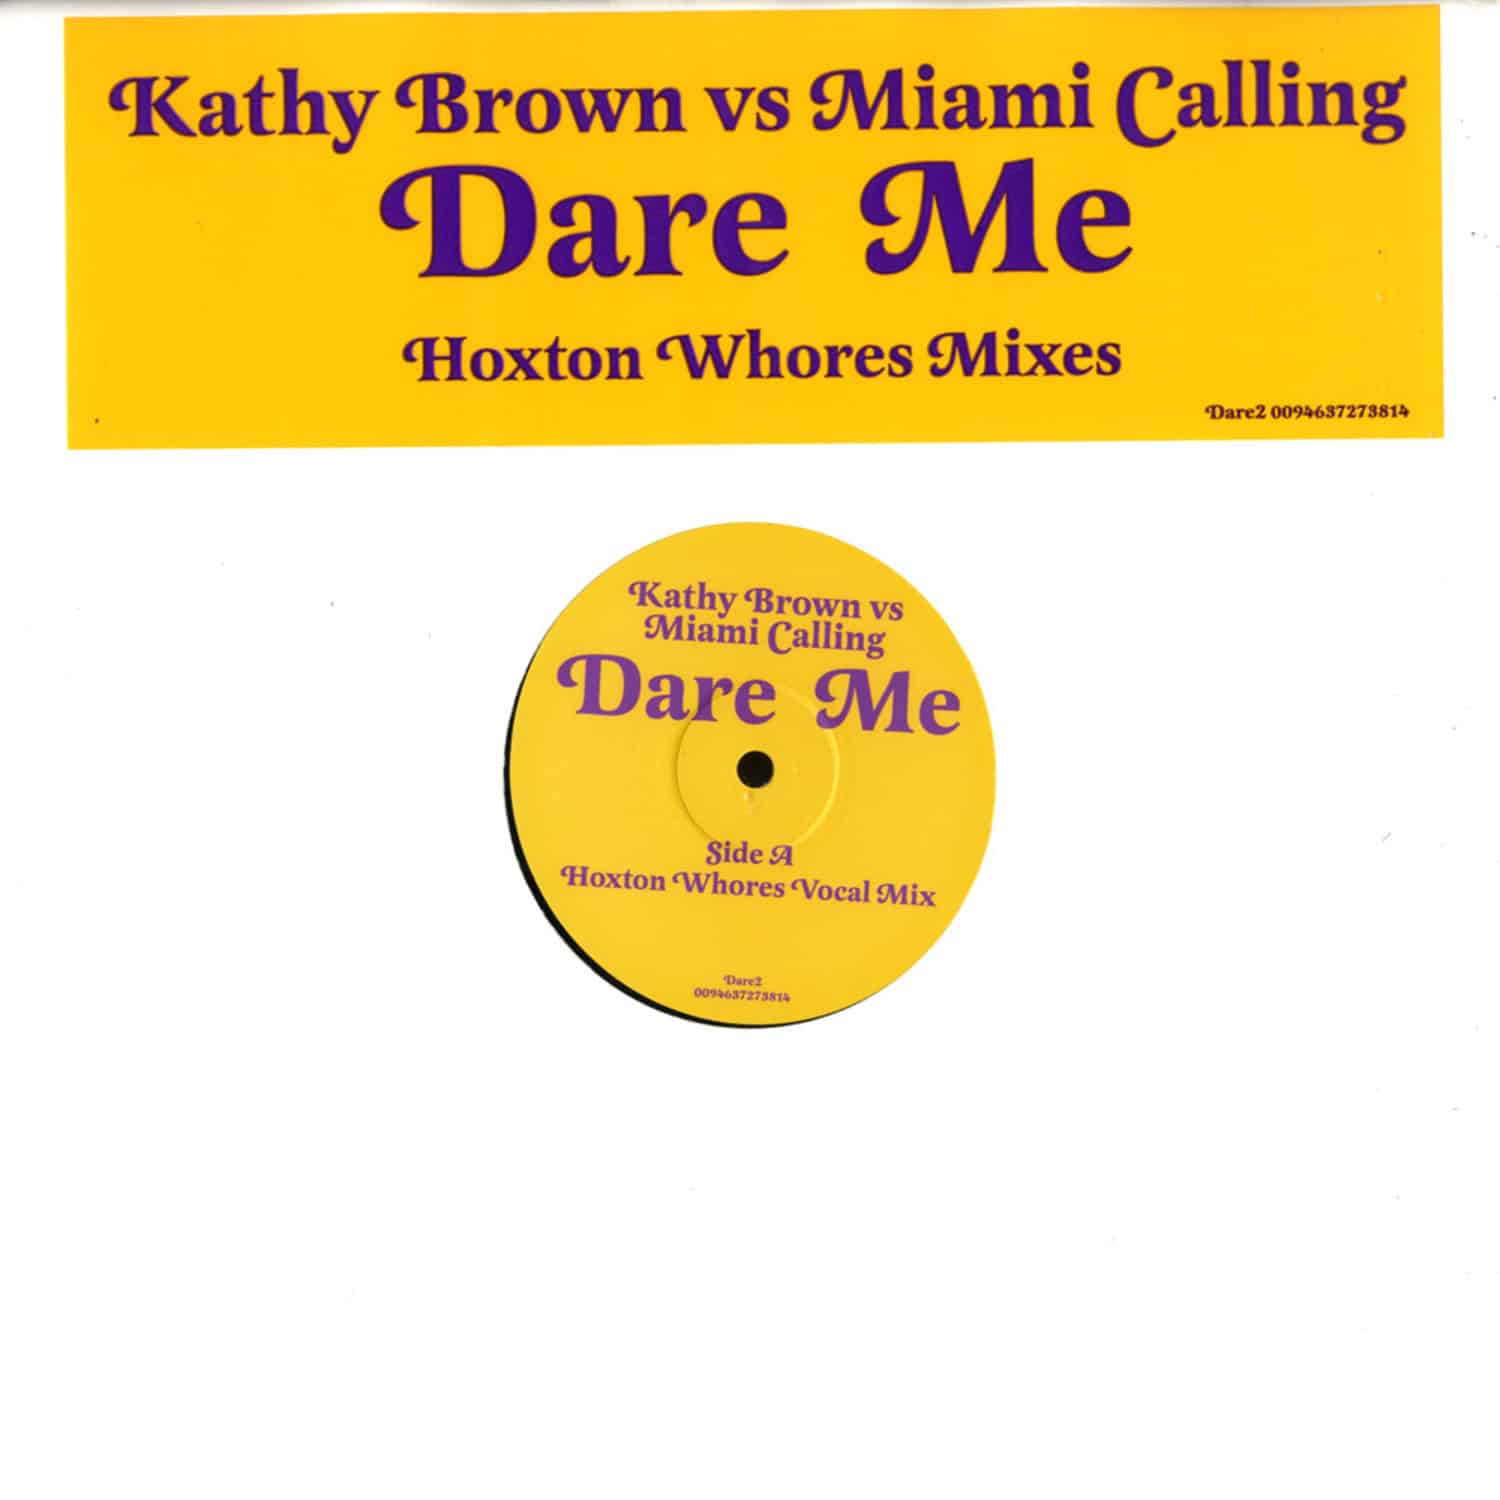 Kathy Brown vs Miami Calling - DARE ME REMIX